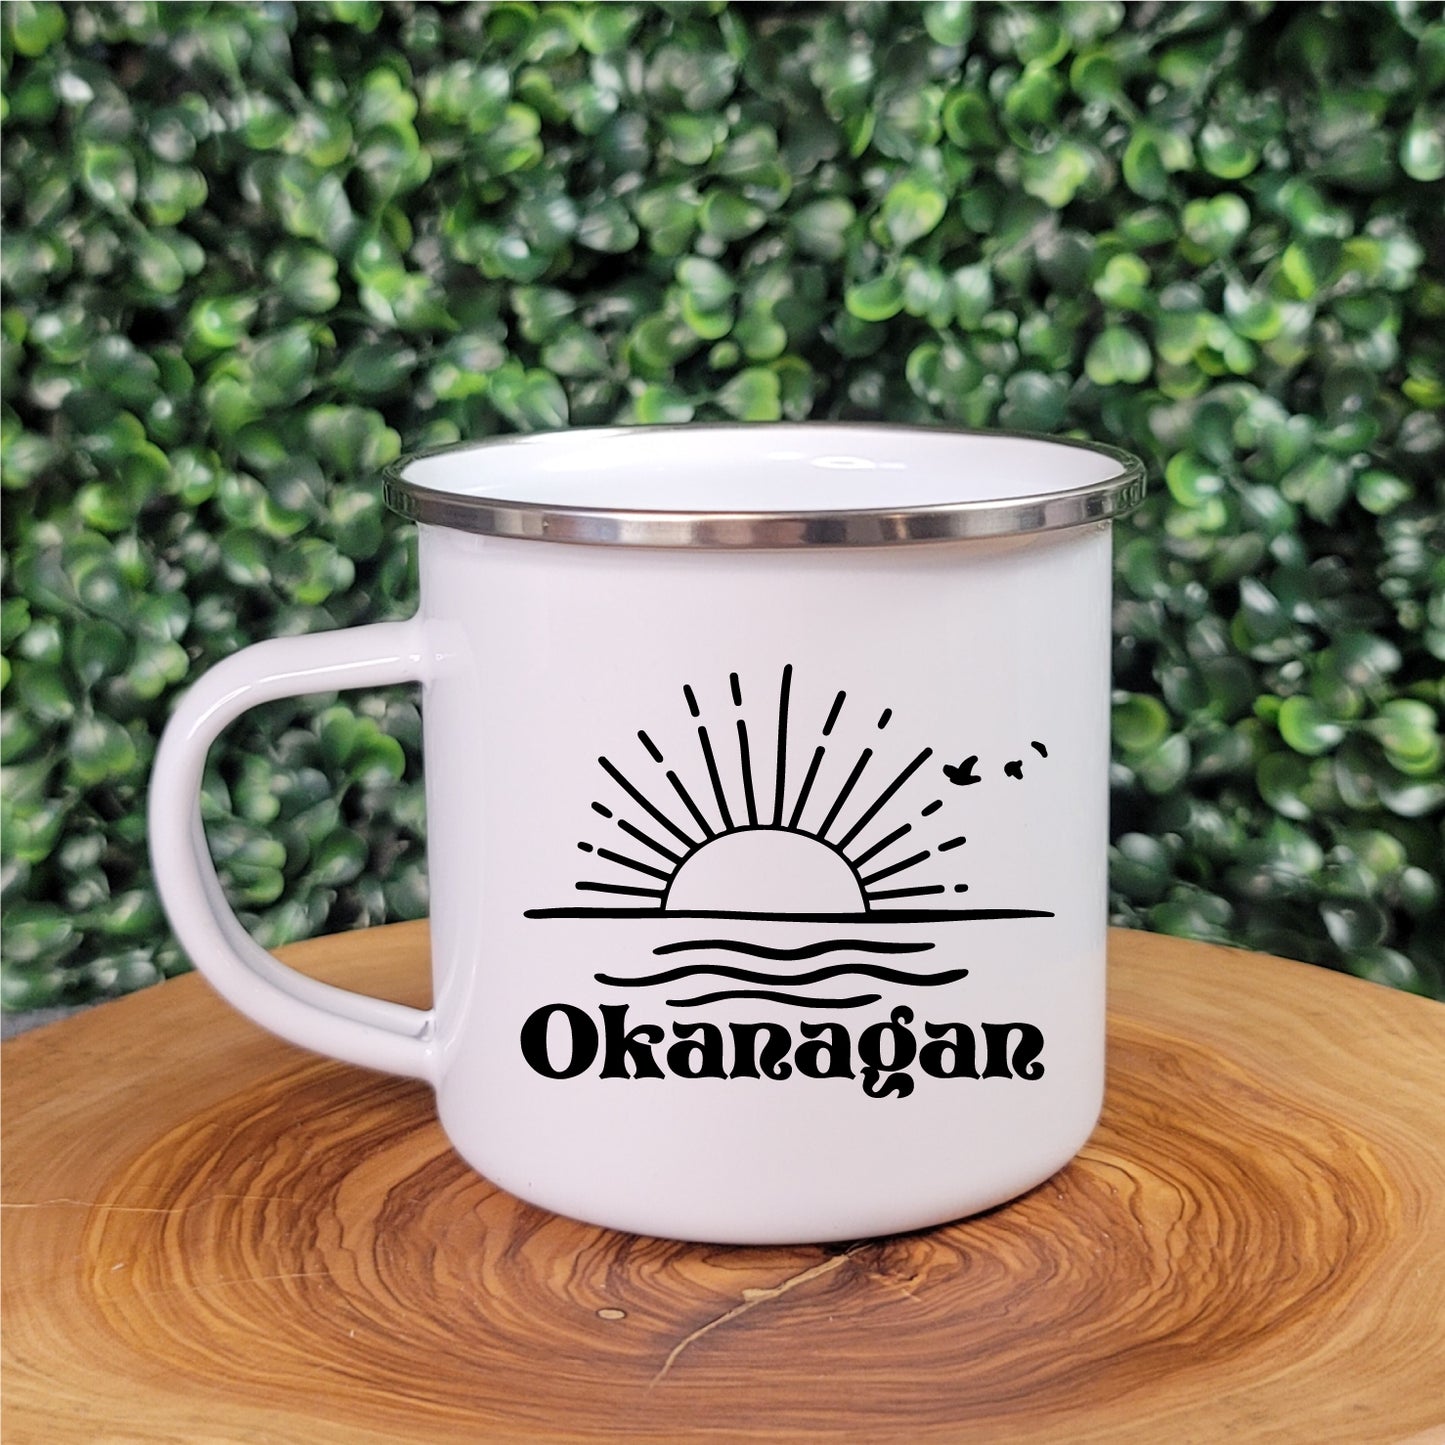 Sunny Okanagan Camp Mug